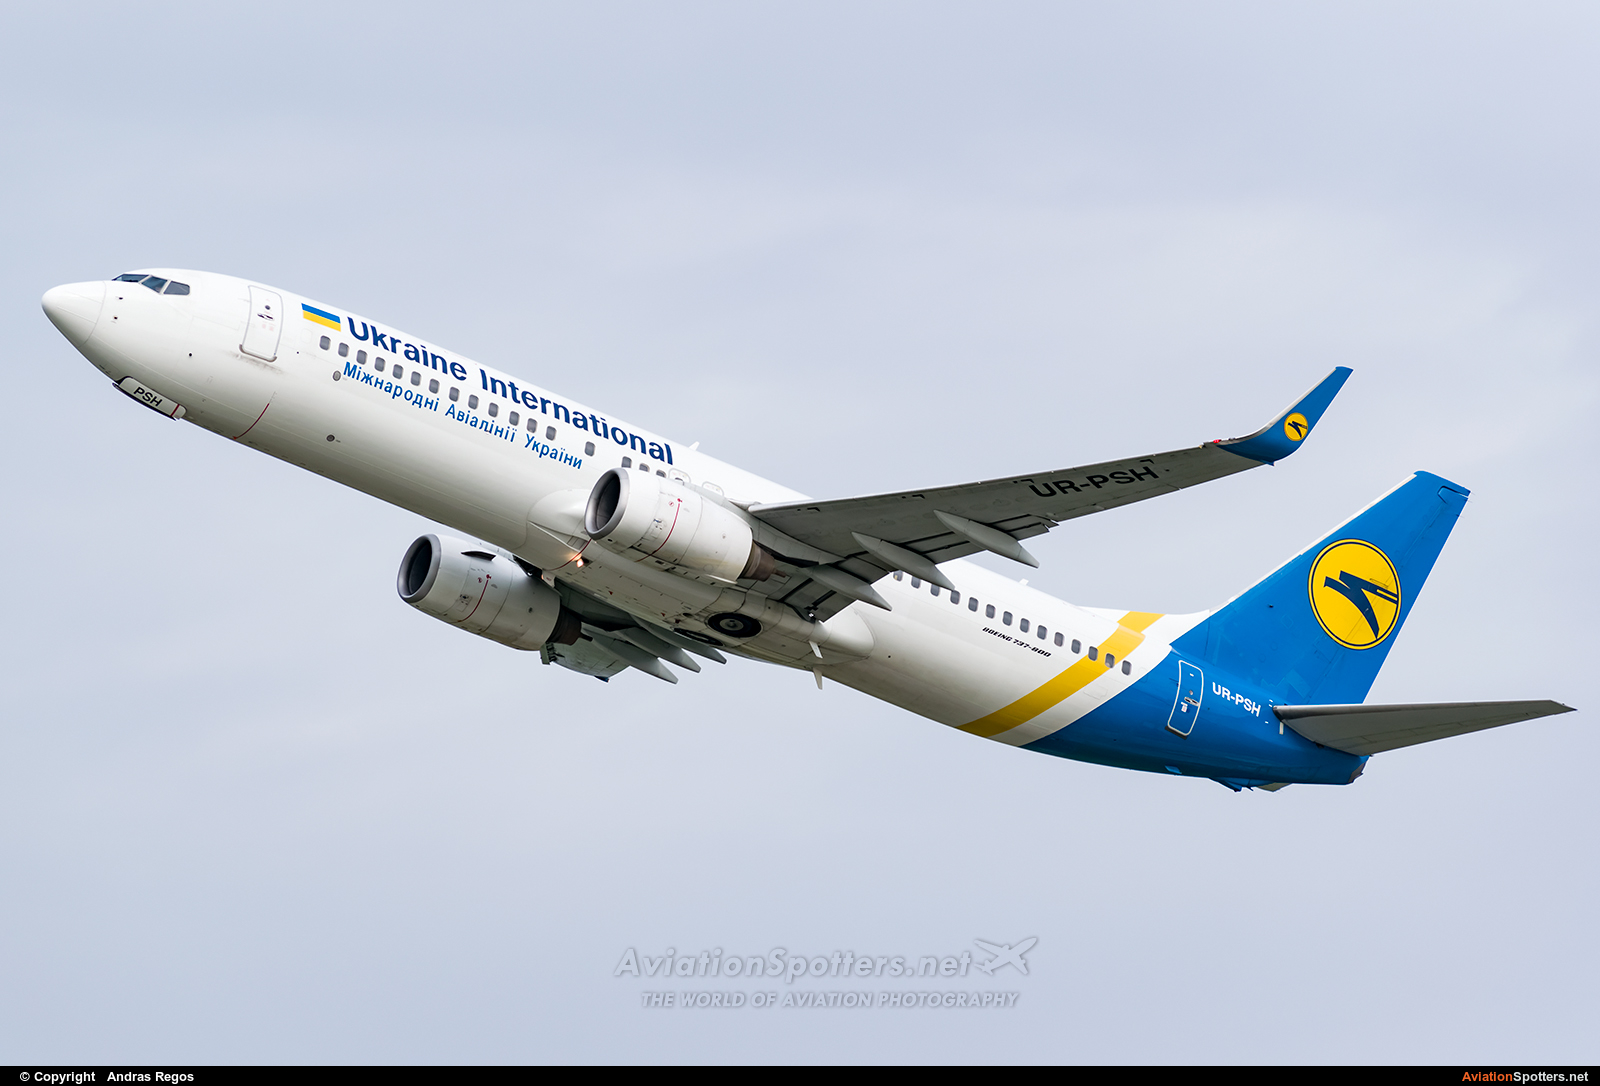 Ukraine International Airlines  -  737-800  (UR-PSH) By Andras Regos (regos)